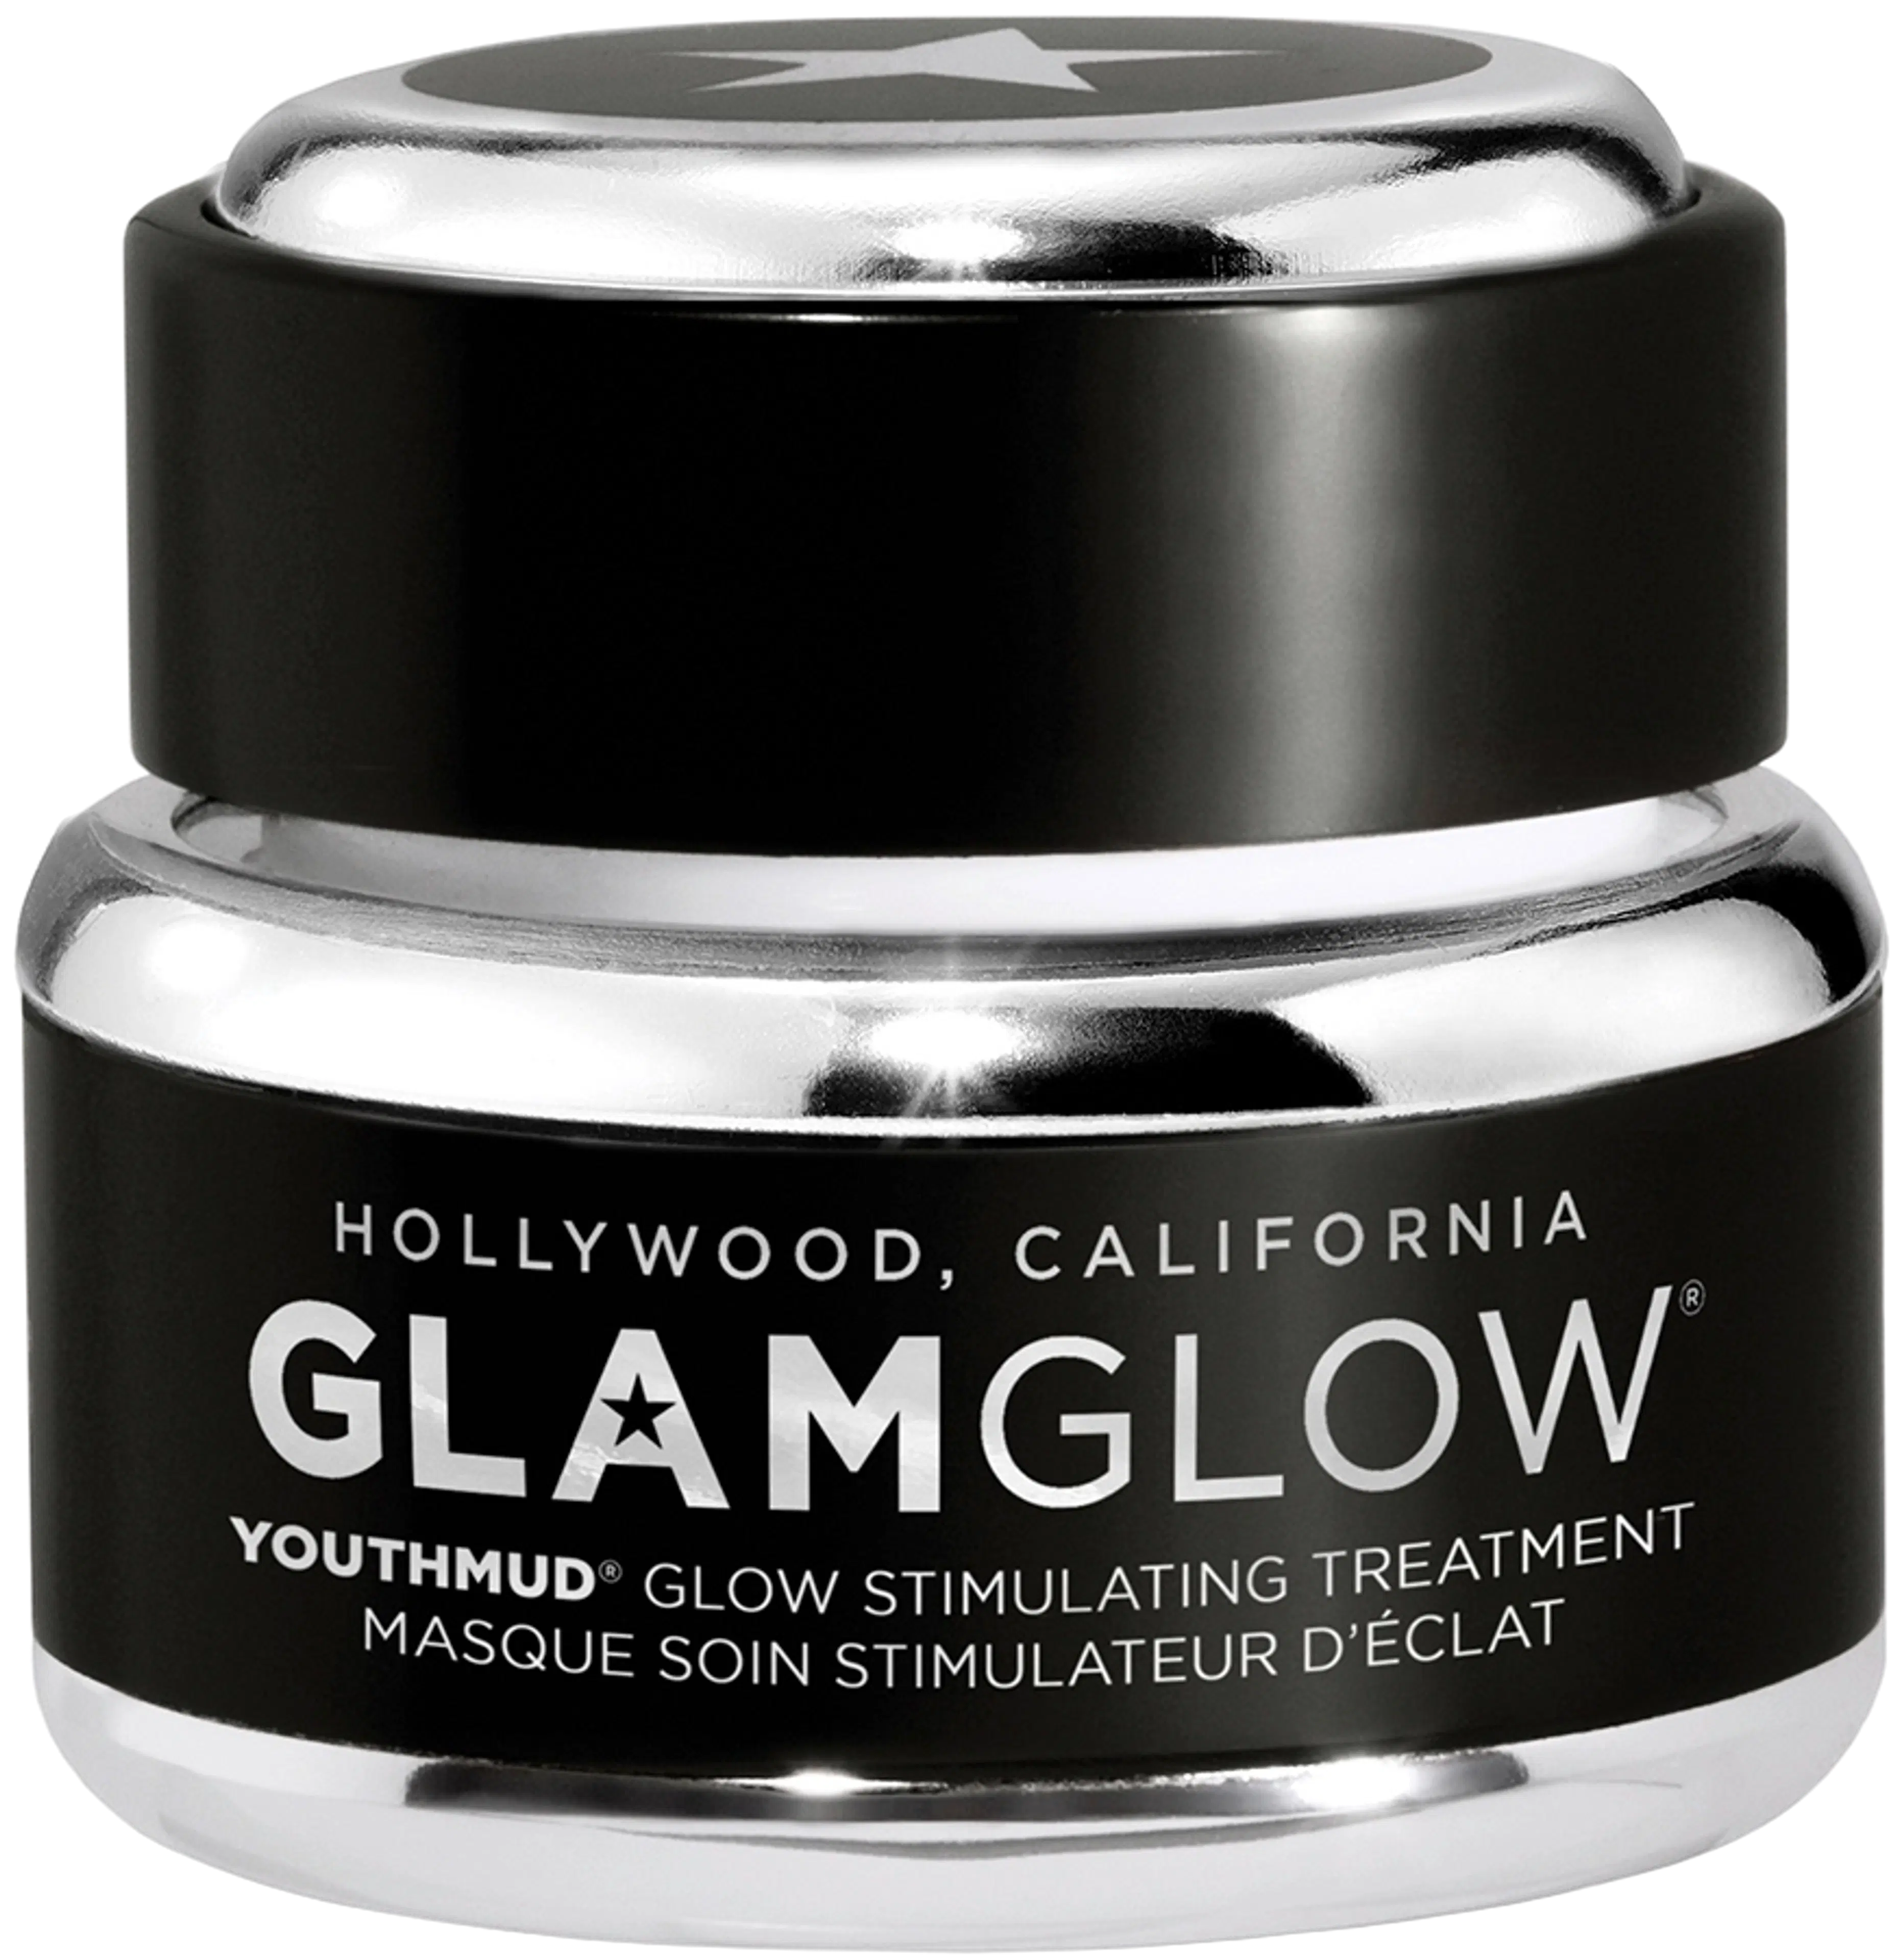 Glamglow Youthmud Glow Stimulating Treatment kasvonaamio 15g